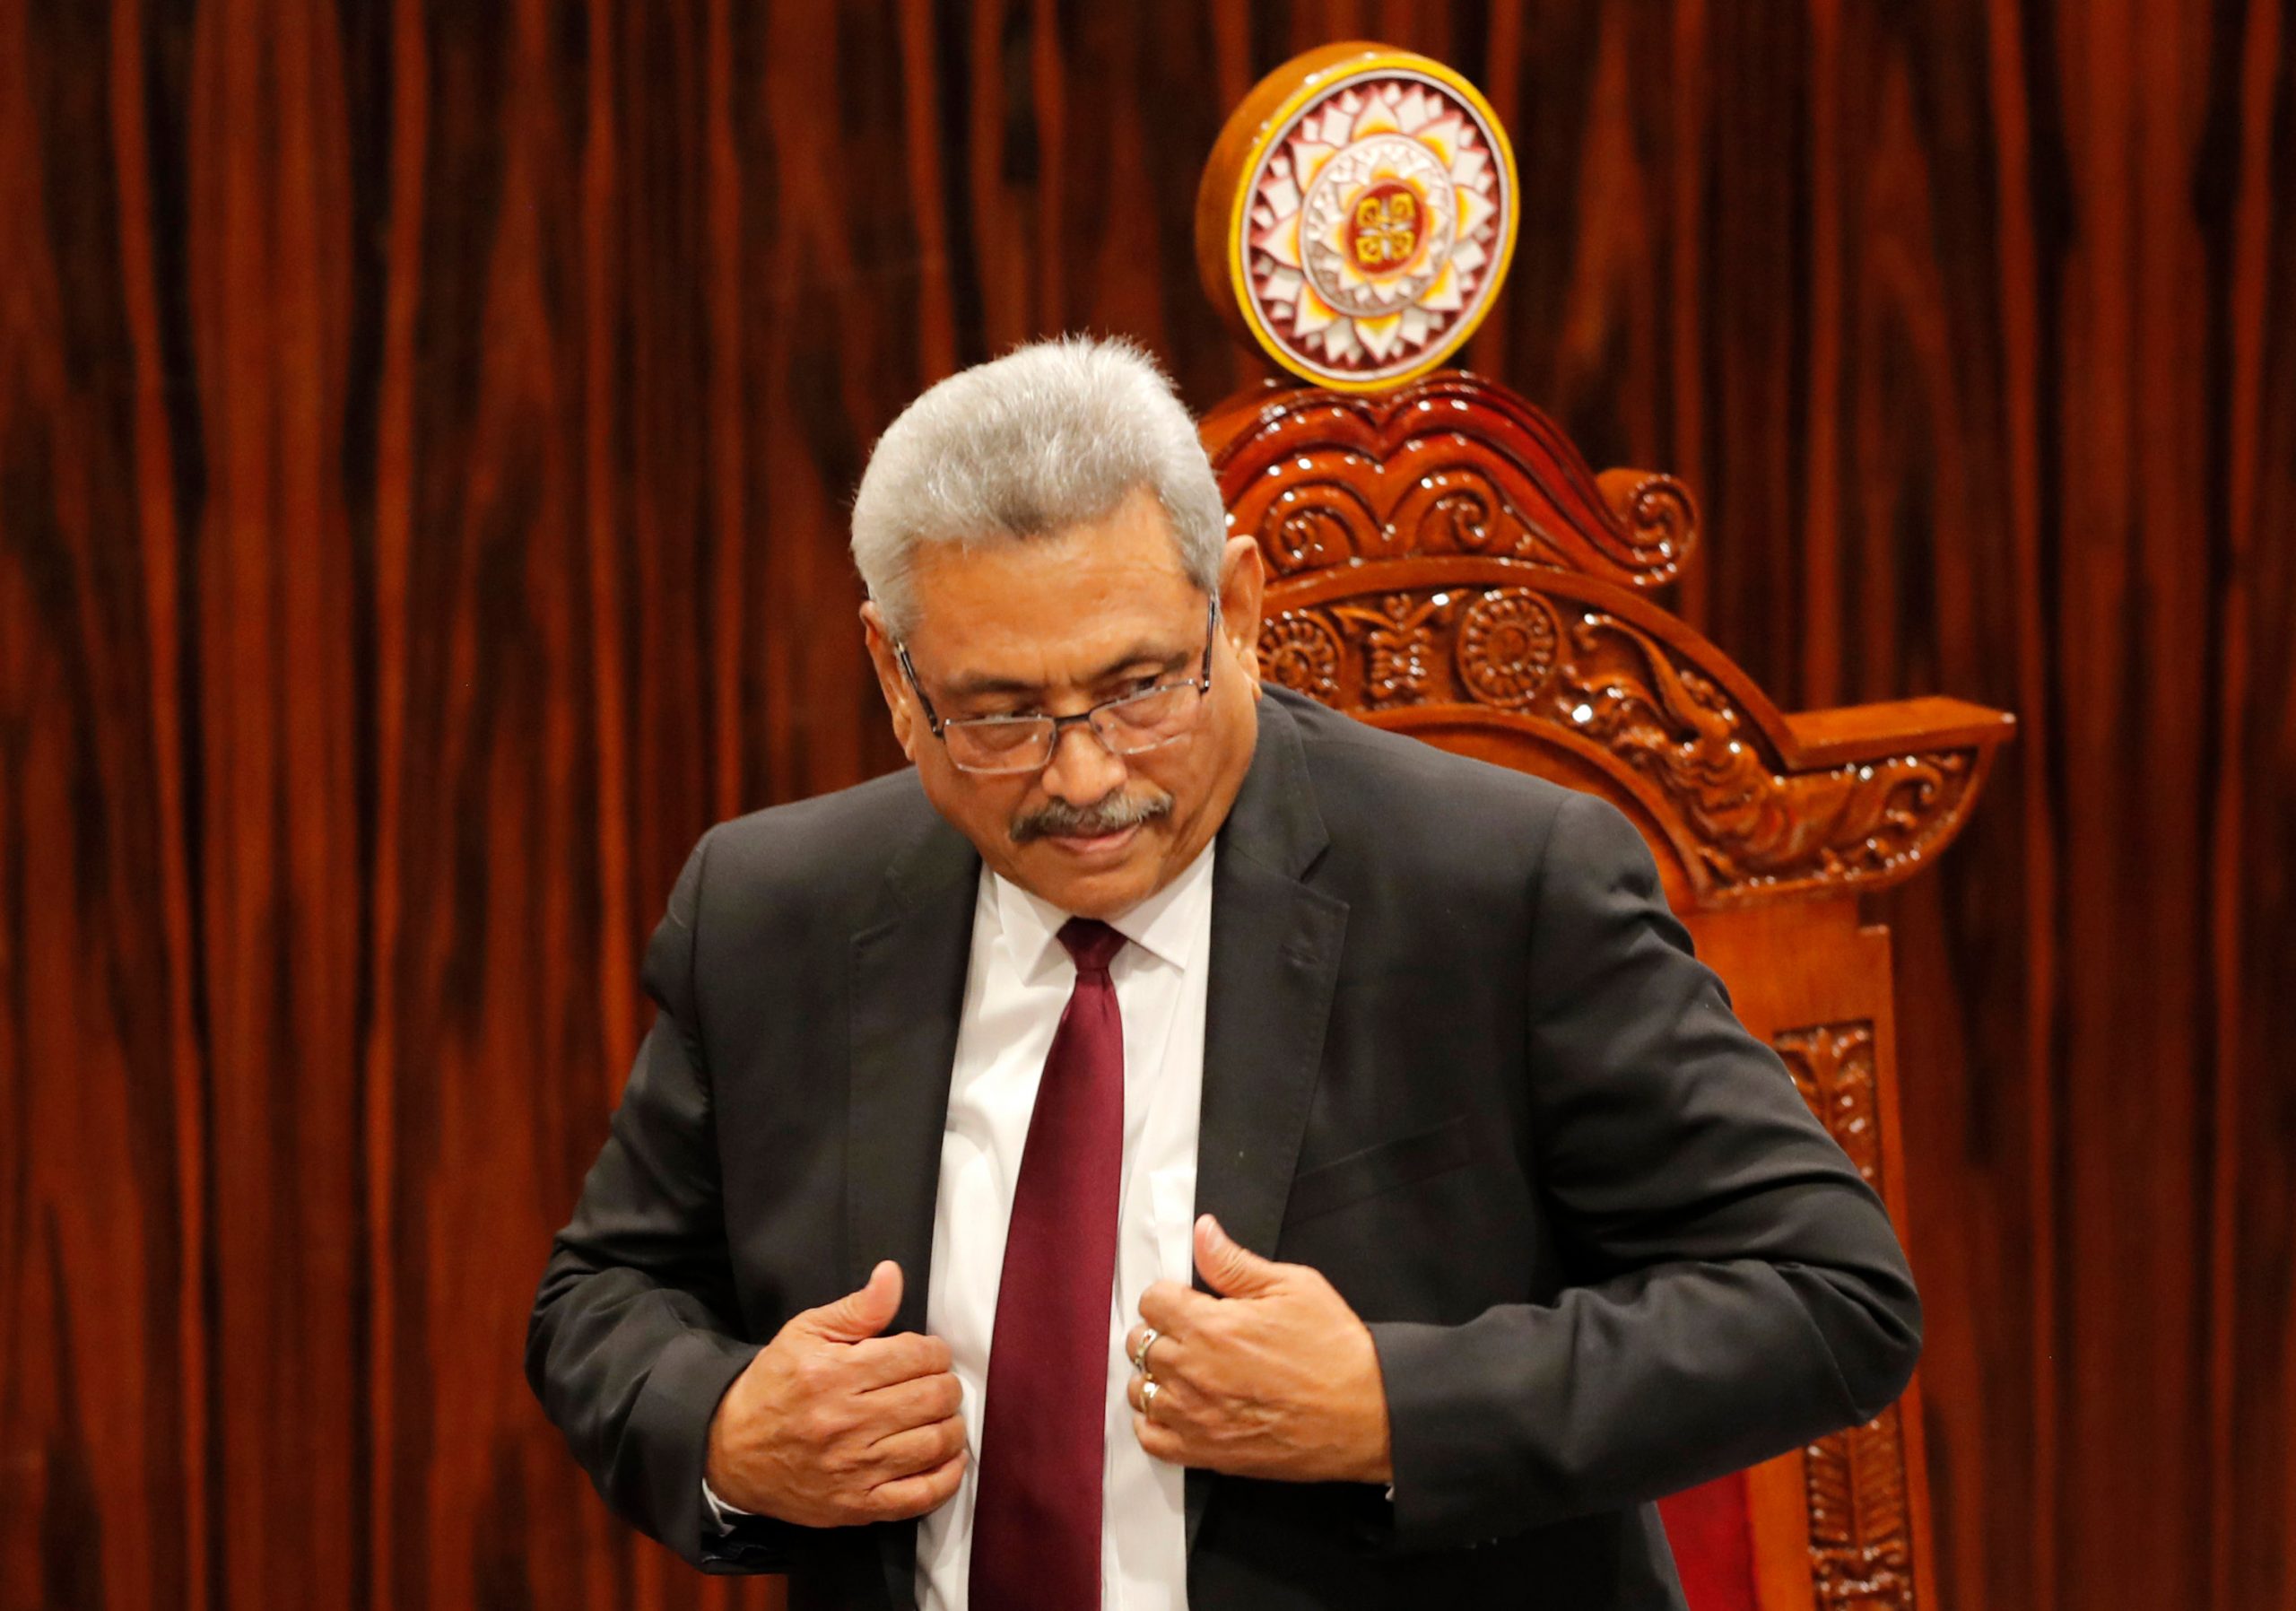 Who is Gotabaya Rajapaksa?